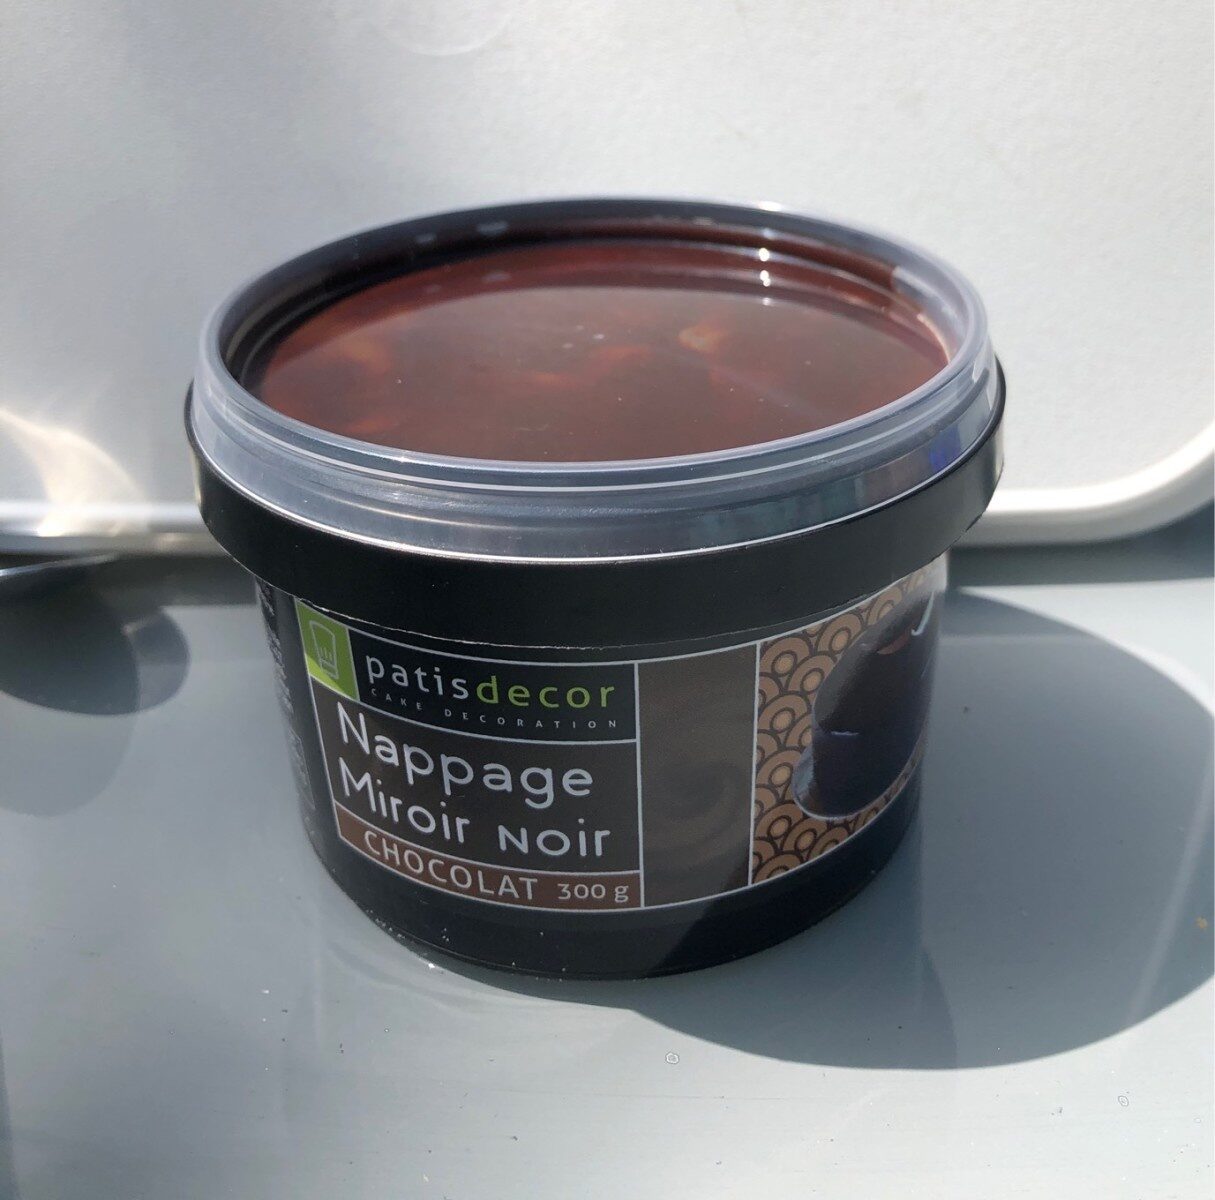 Nappage miroir chocolat - Tableau nutritionnel